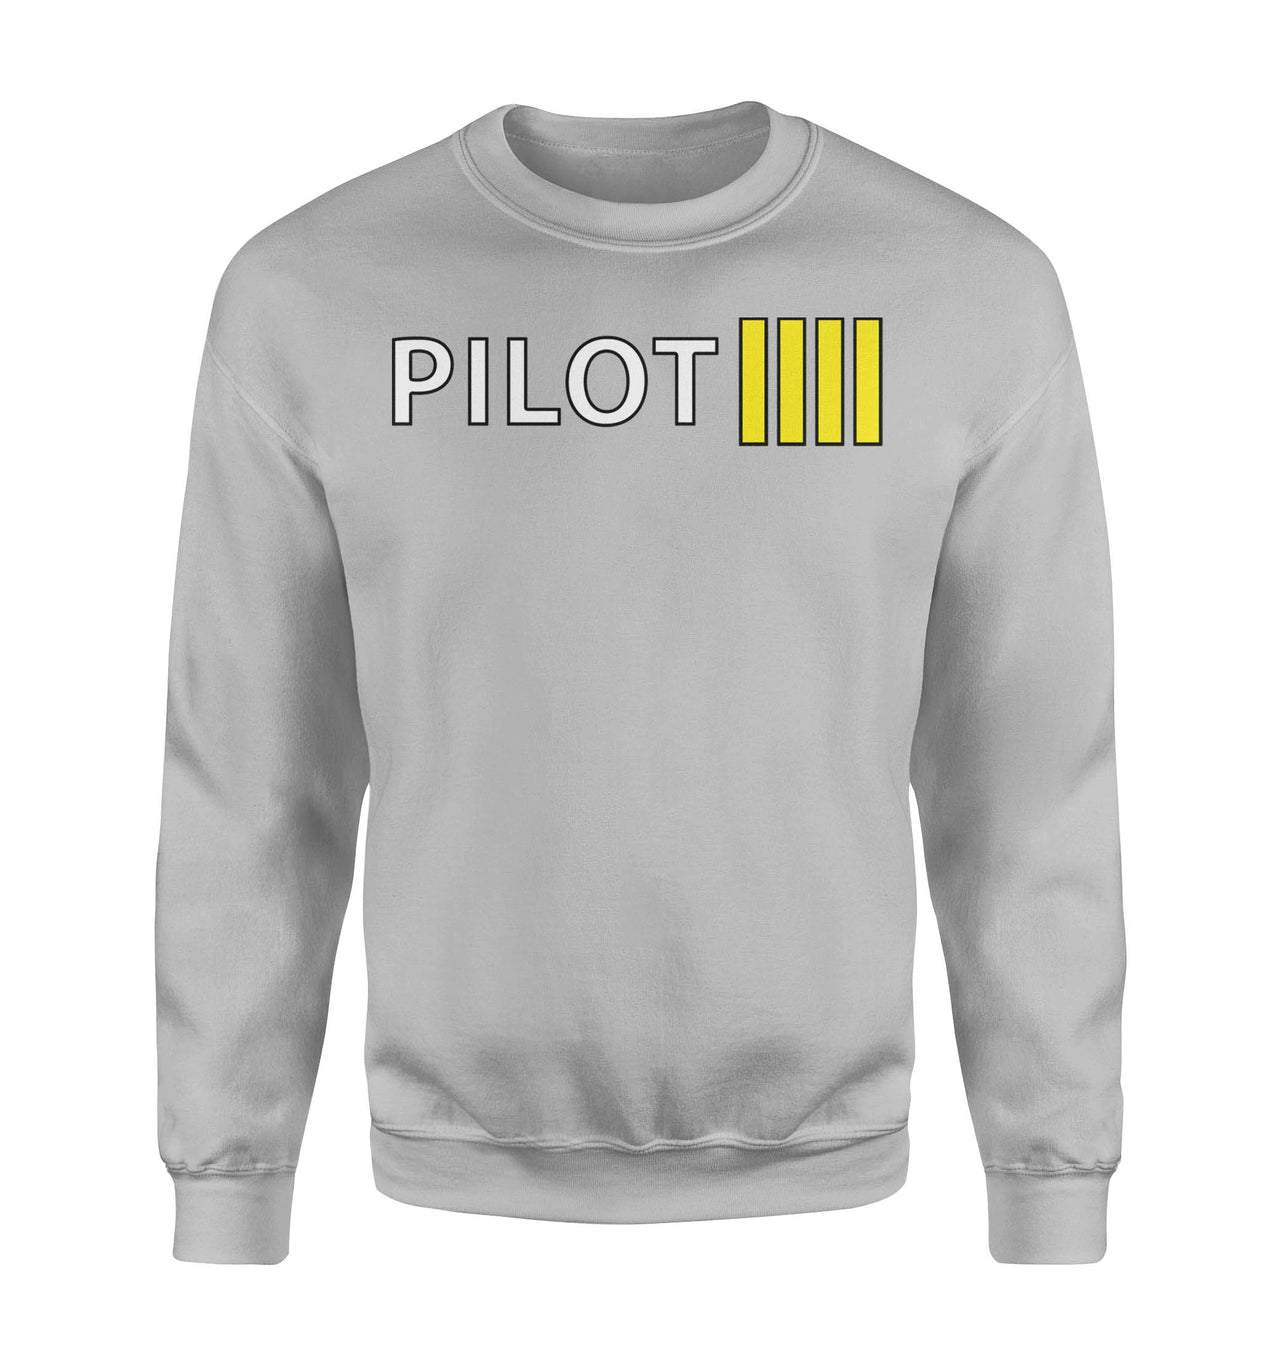 Pilot & Stripes (4 Lines) Designed Sweatshirts